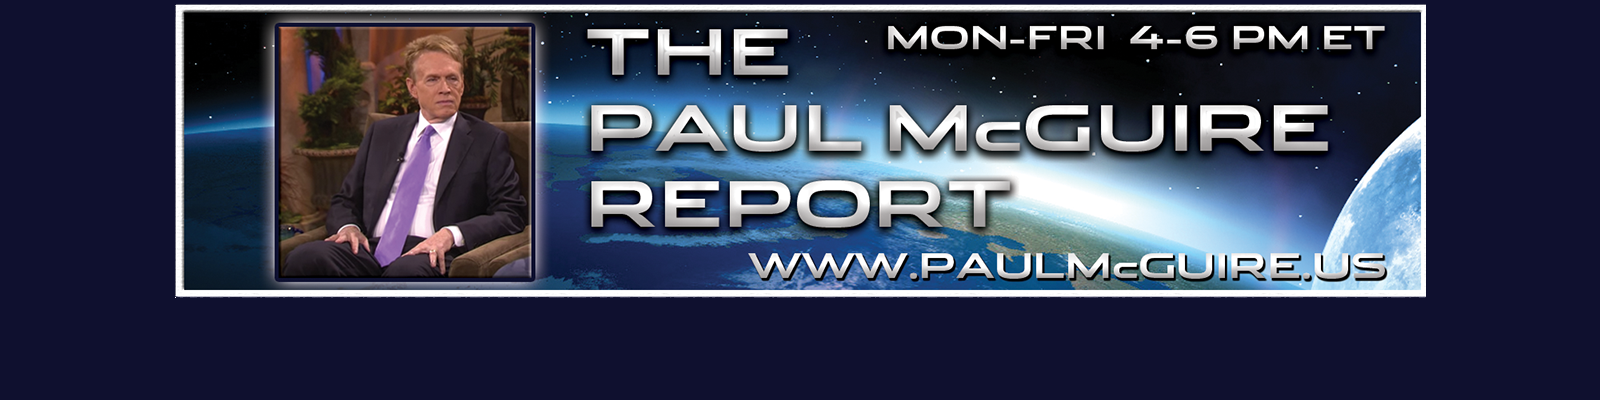 THE PAUL McGUIRE REPORT